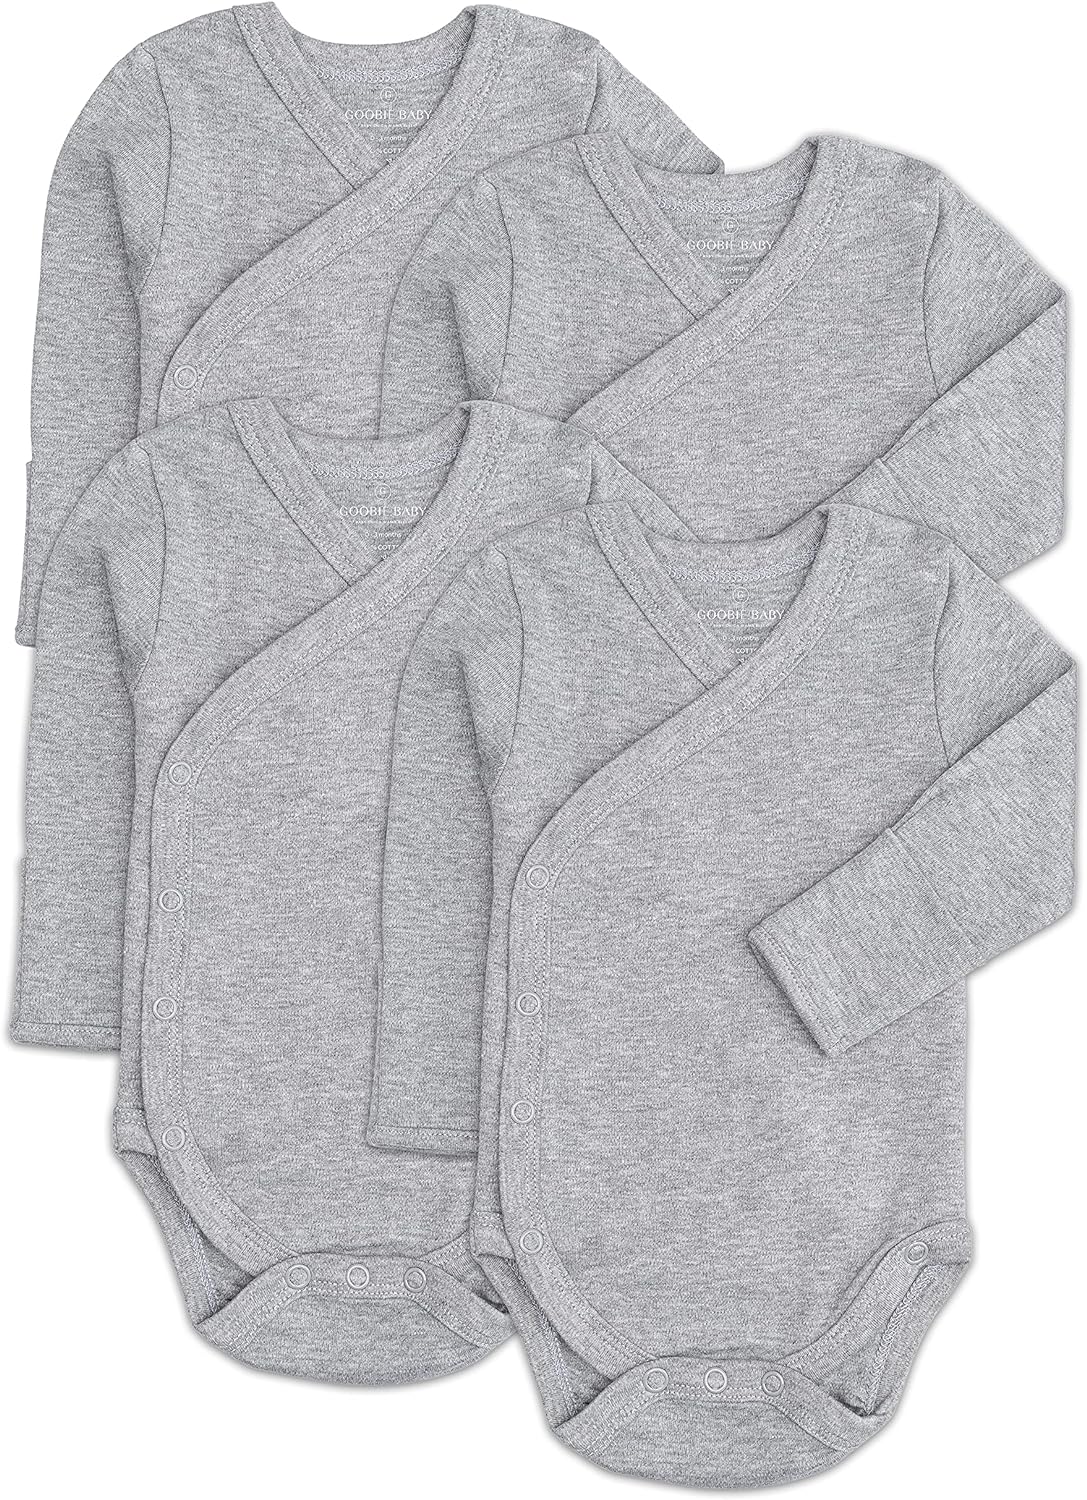 Baby Side Snap Bodysuit Set, 100% Cotton Boy Girl Unisex Kimono Onesie, 4 Pack